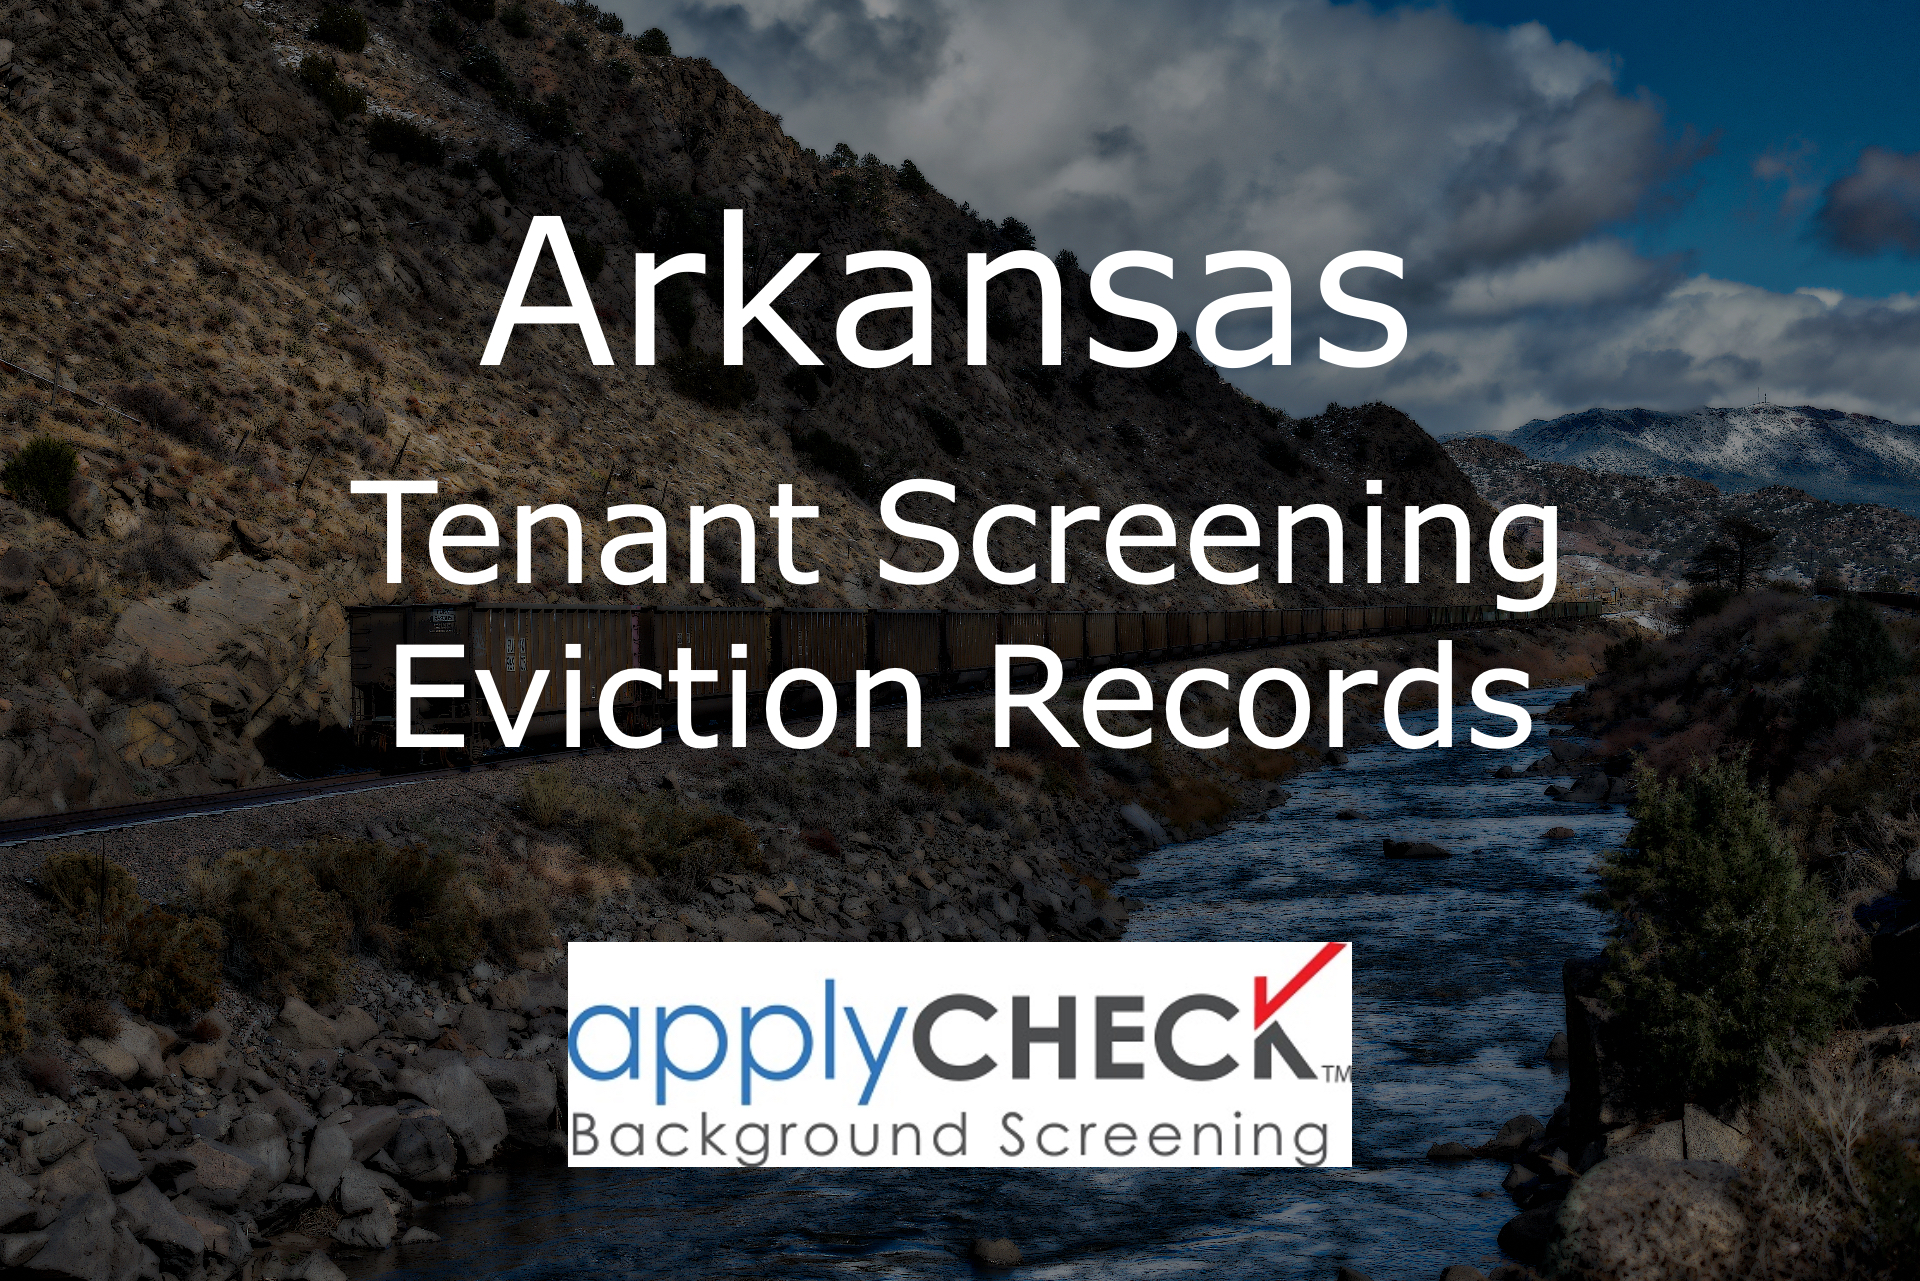 Arkansas tenant screening eviction Image